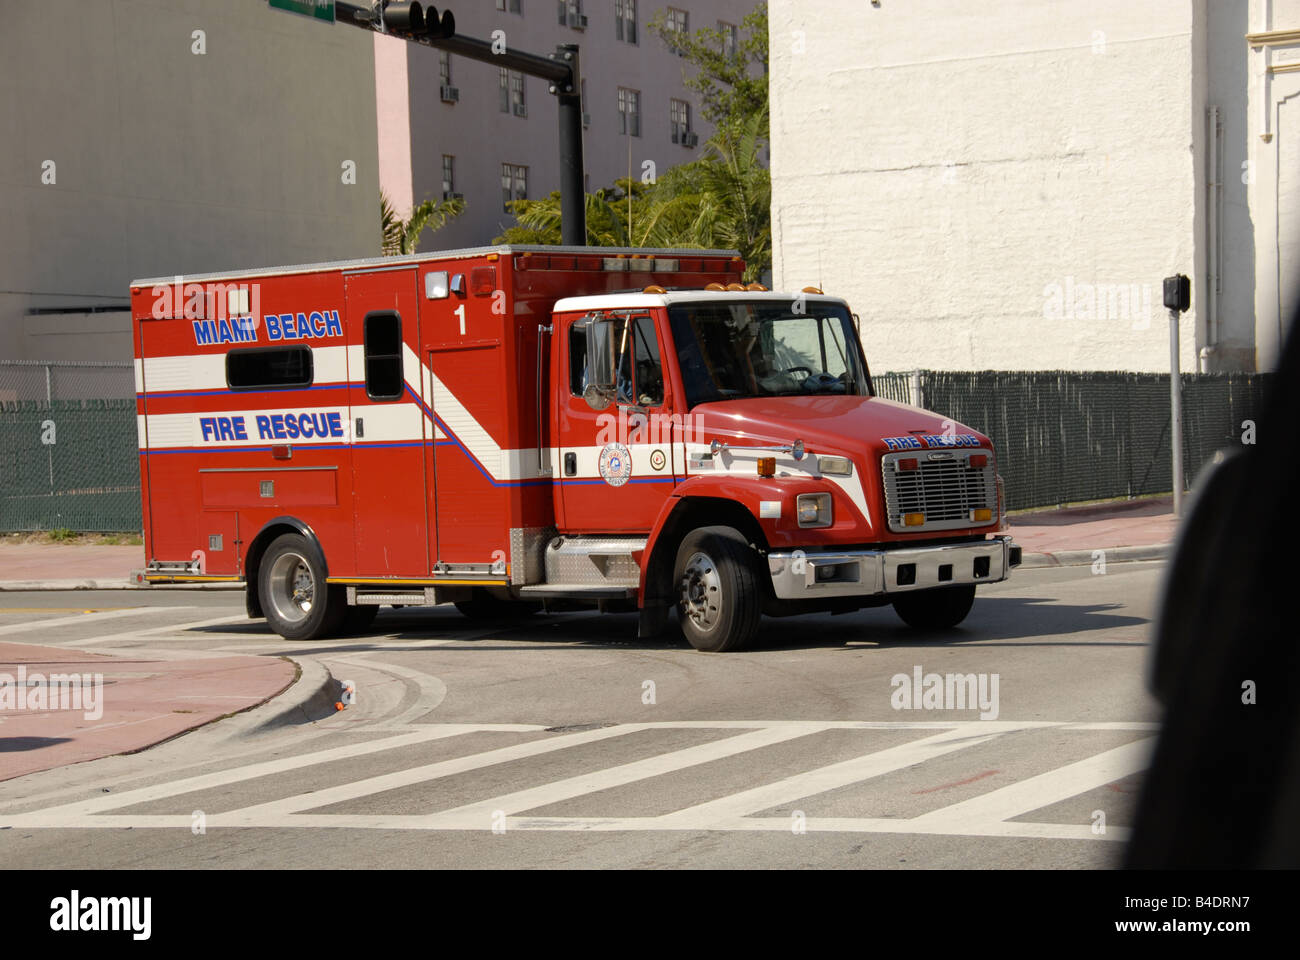 Fire rescue vehicle speeding to emergency. Stock Photo